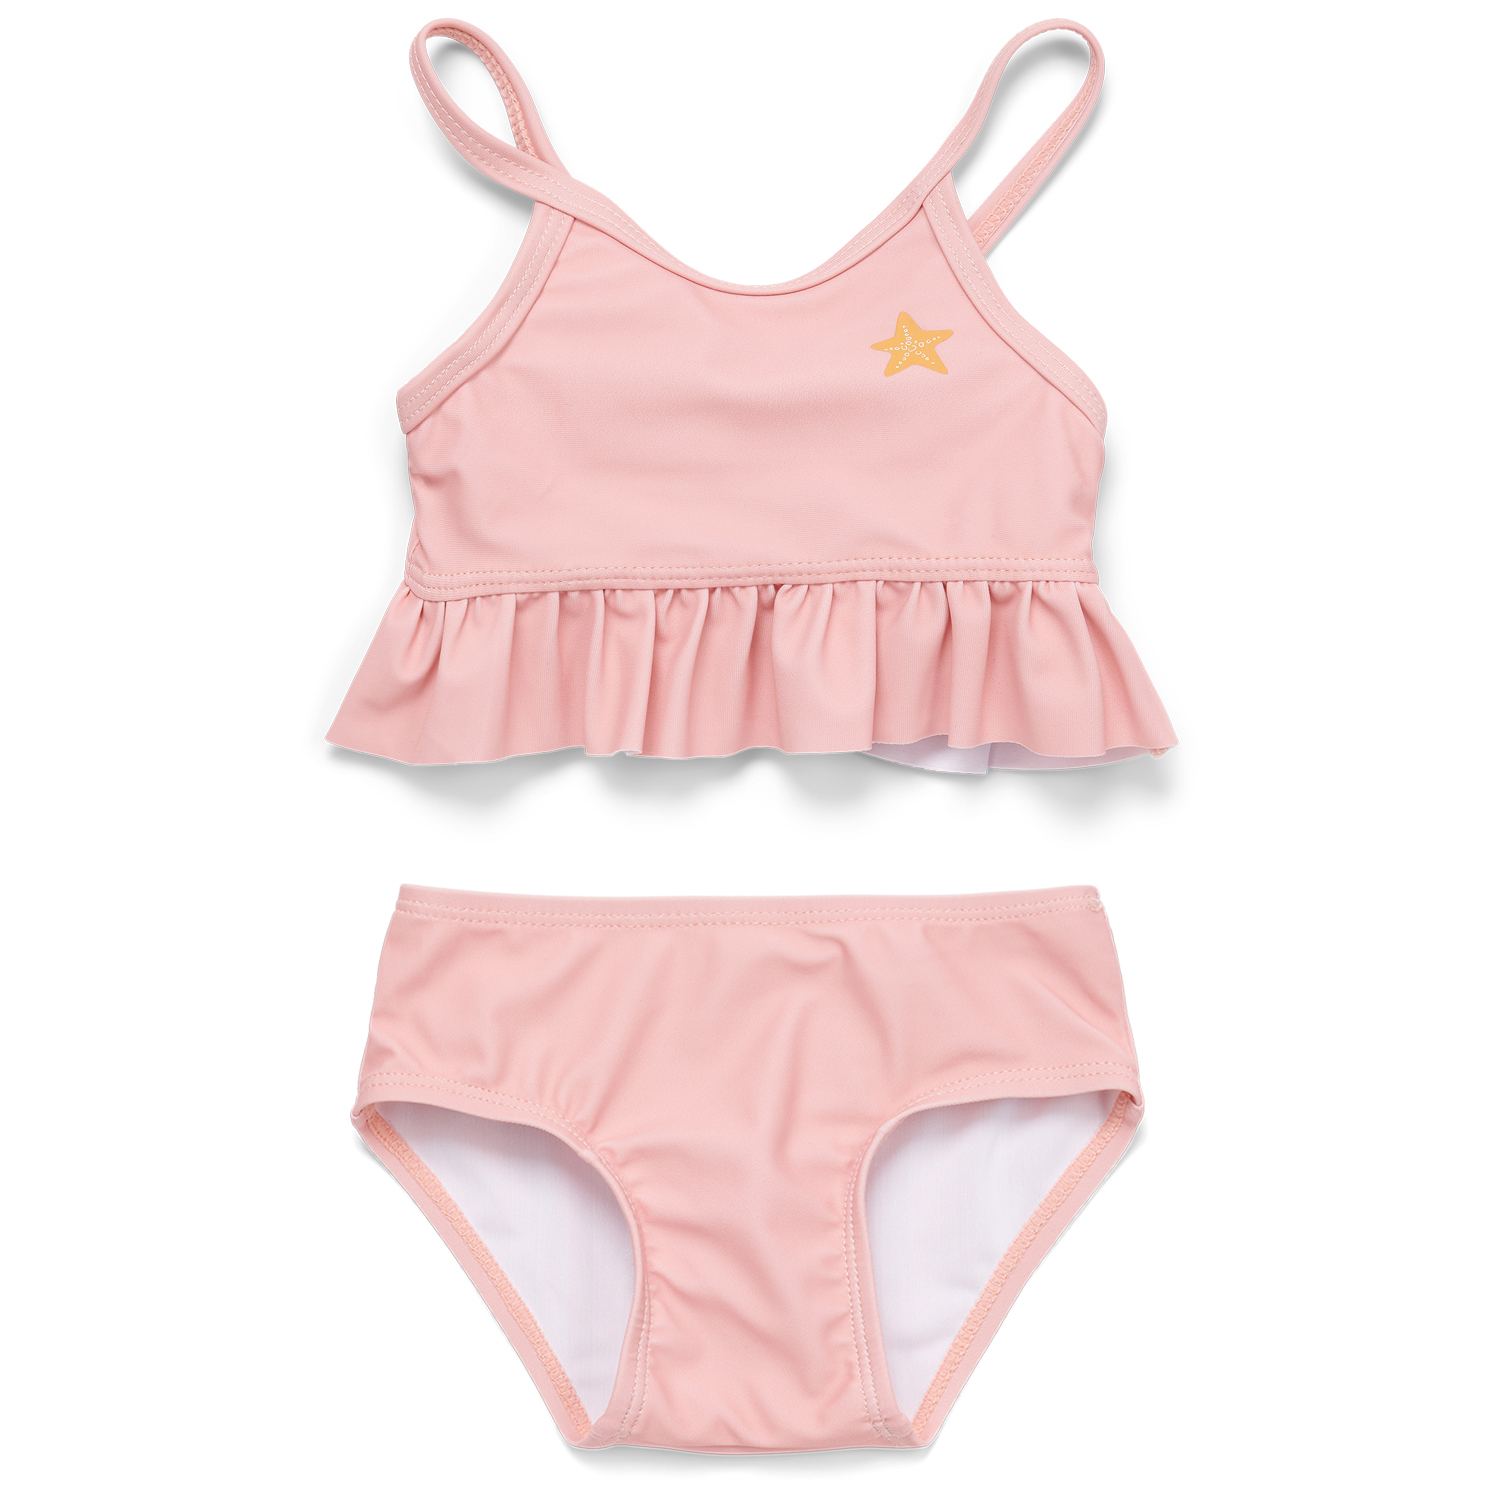 Bikini mit Volants / Rüschen Starfish Pink rosa (Gr. 98/104)